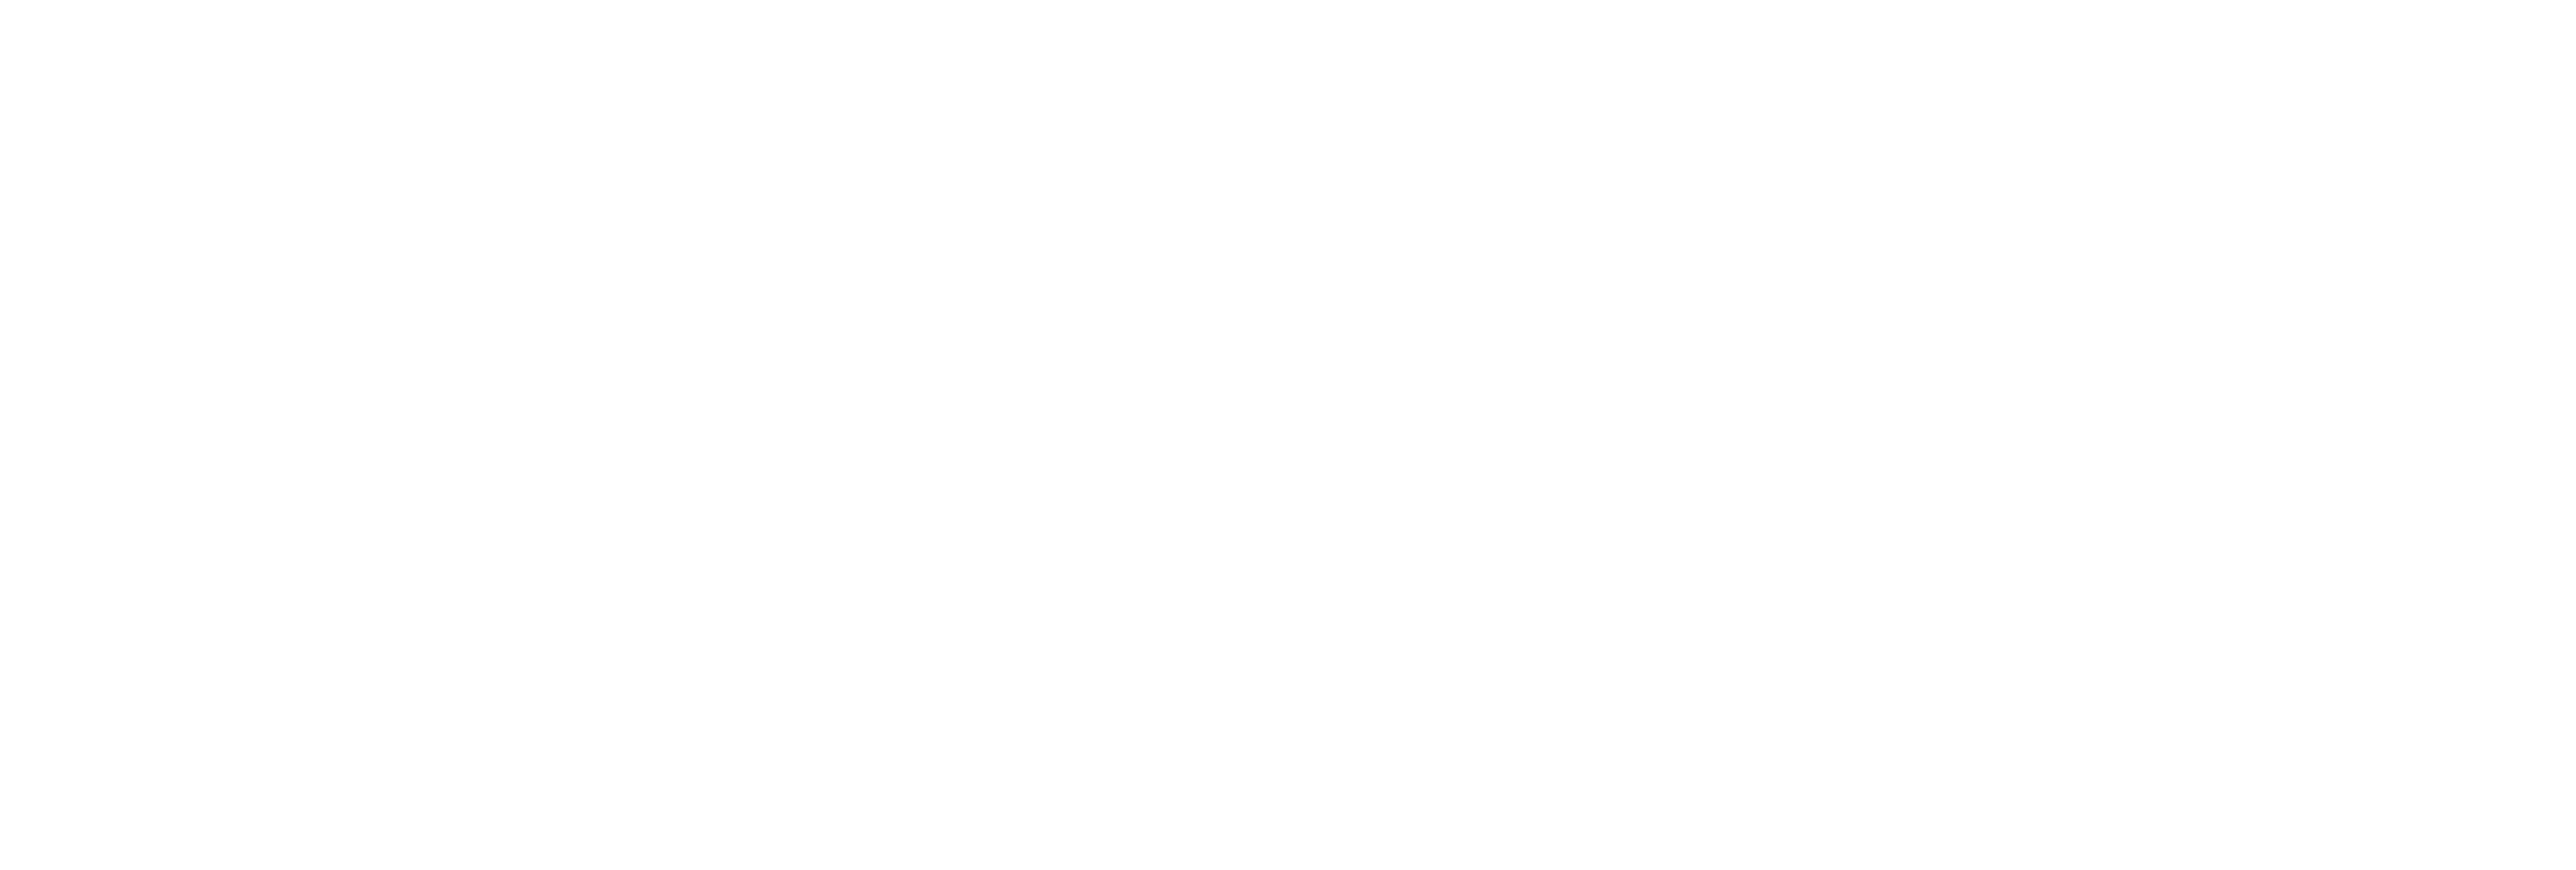 AniCura West-Friesland - Grootebroek logo